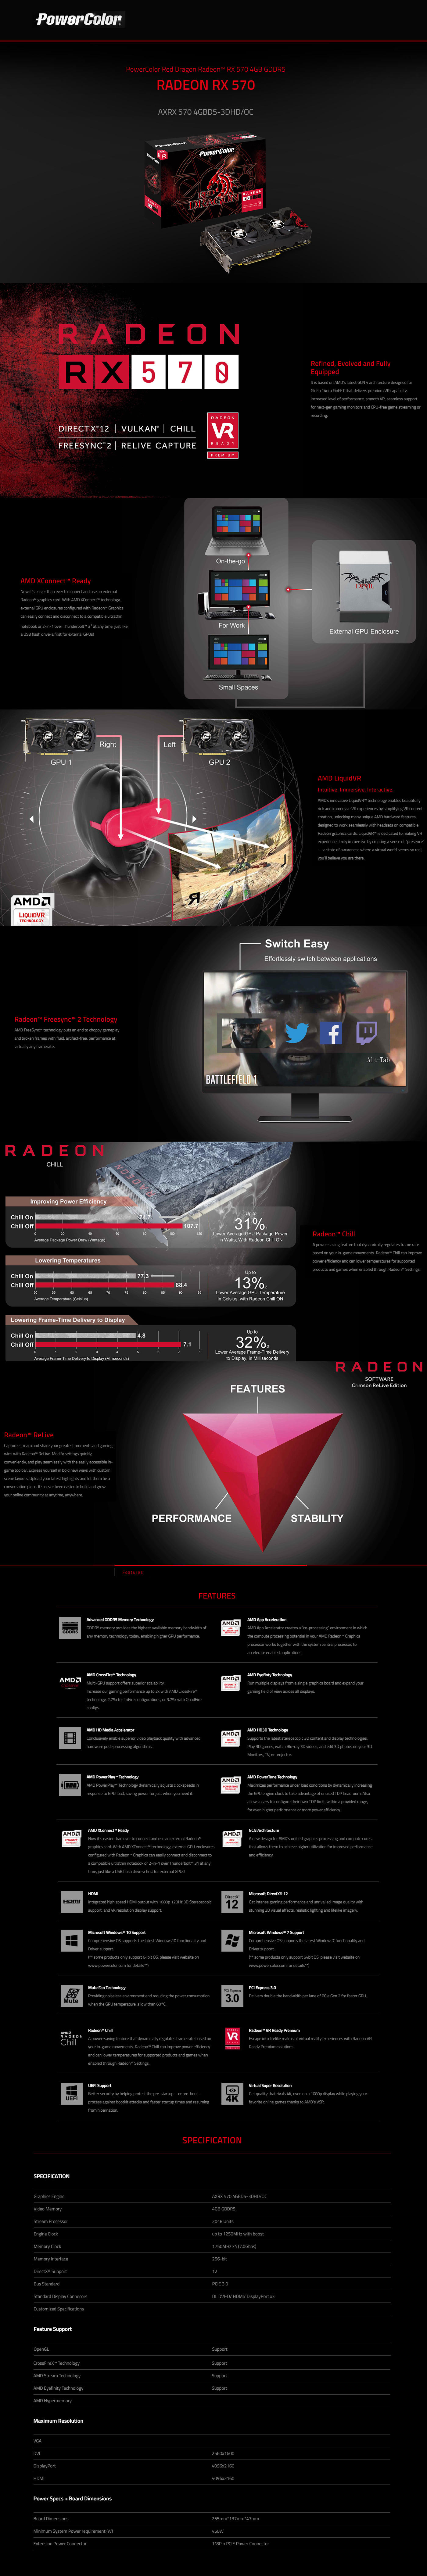 Buy Online PowerColor Red Dragon Radeon RX 570 4GB GDDR5 (AXRX 570 4GBD5-3DHD-OC)